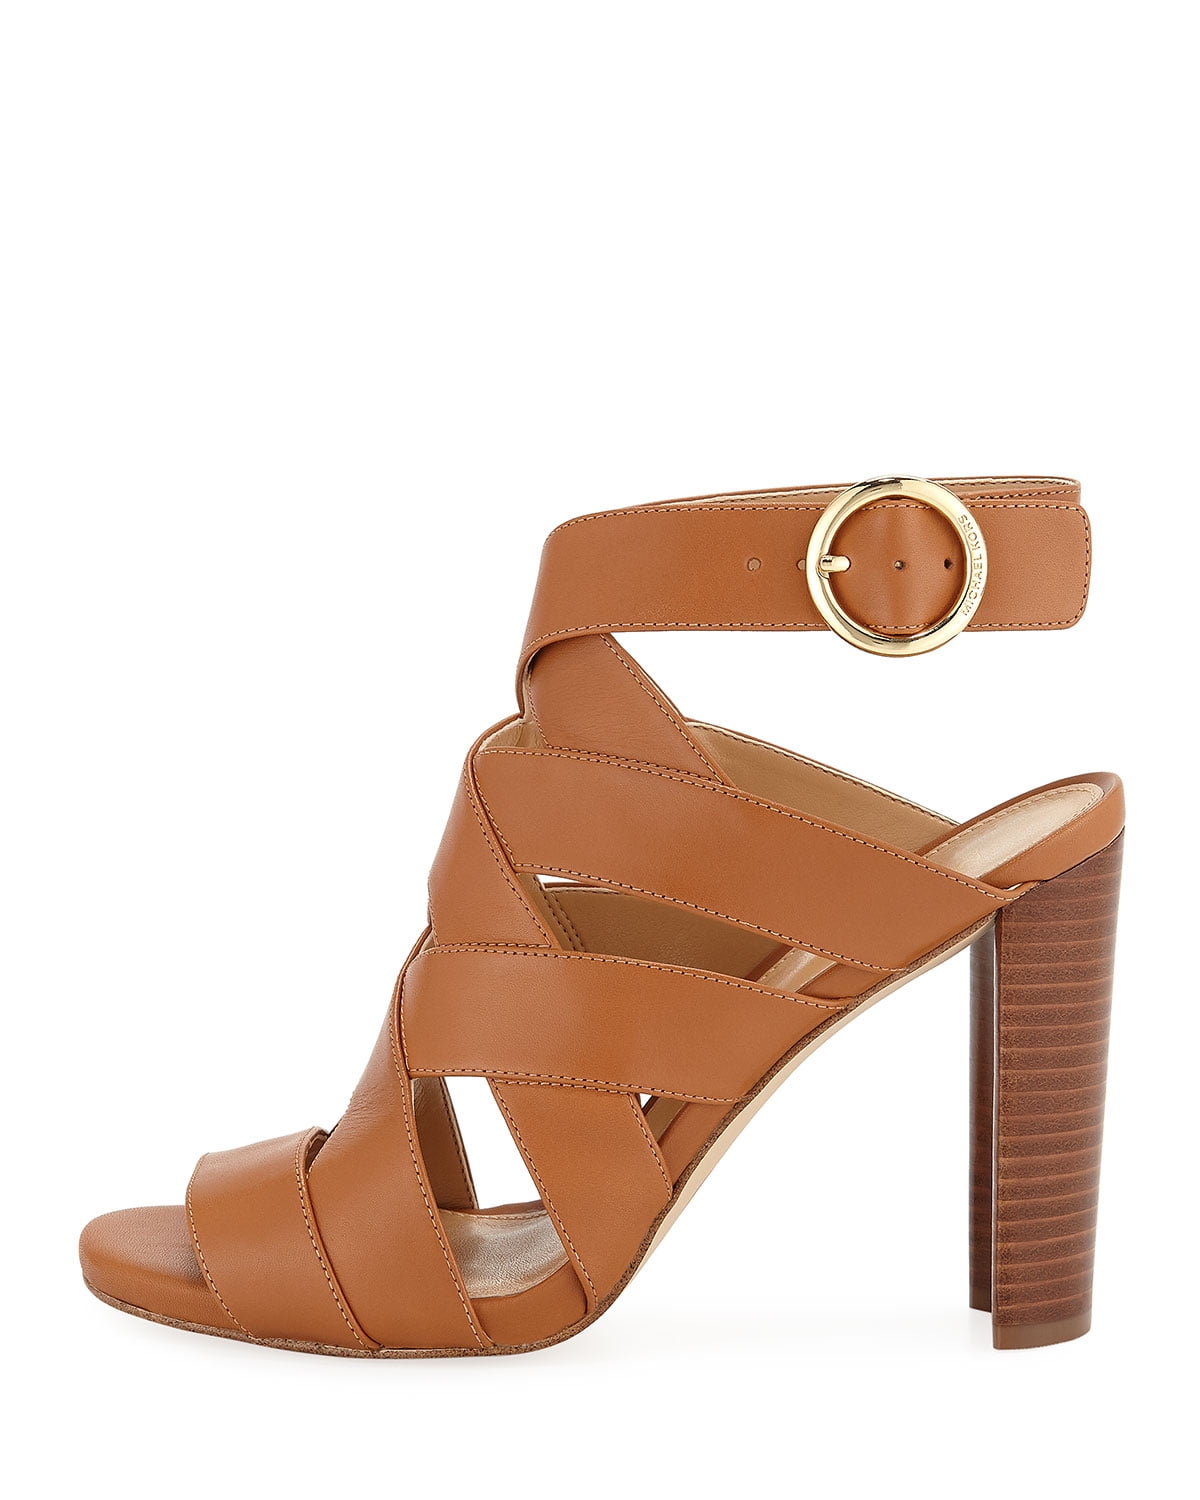 Alana Sandal Leather Color ACORN Size 